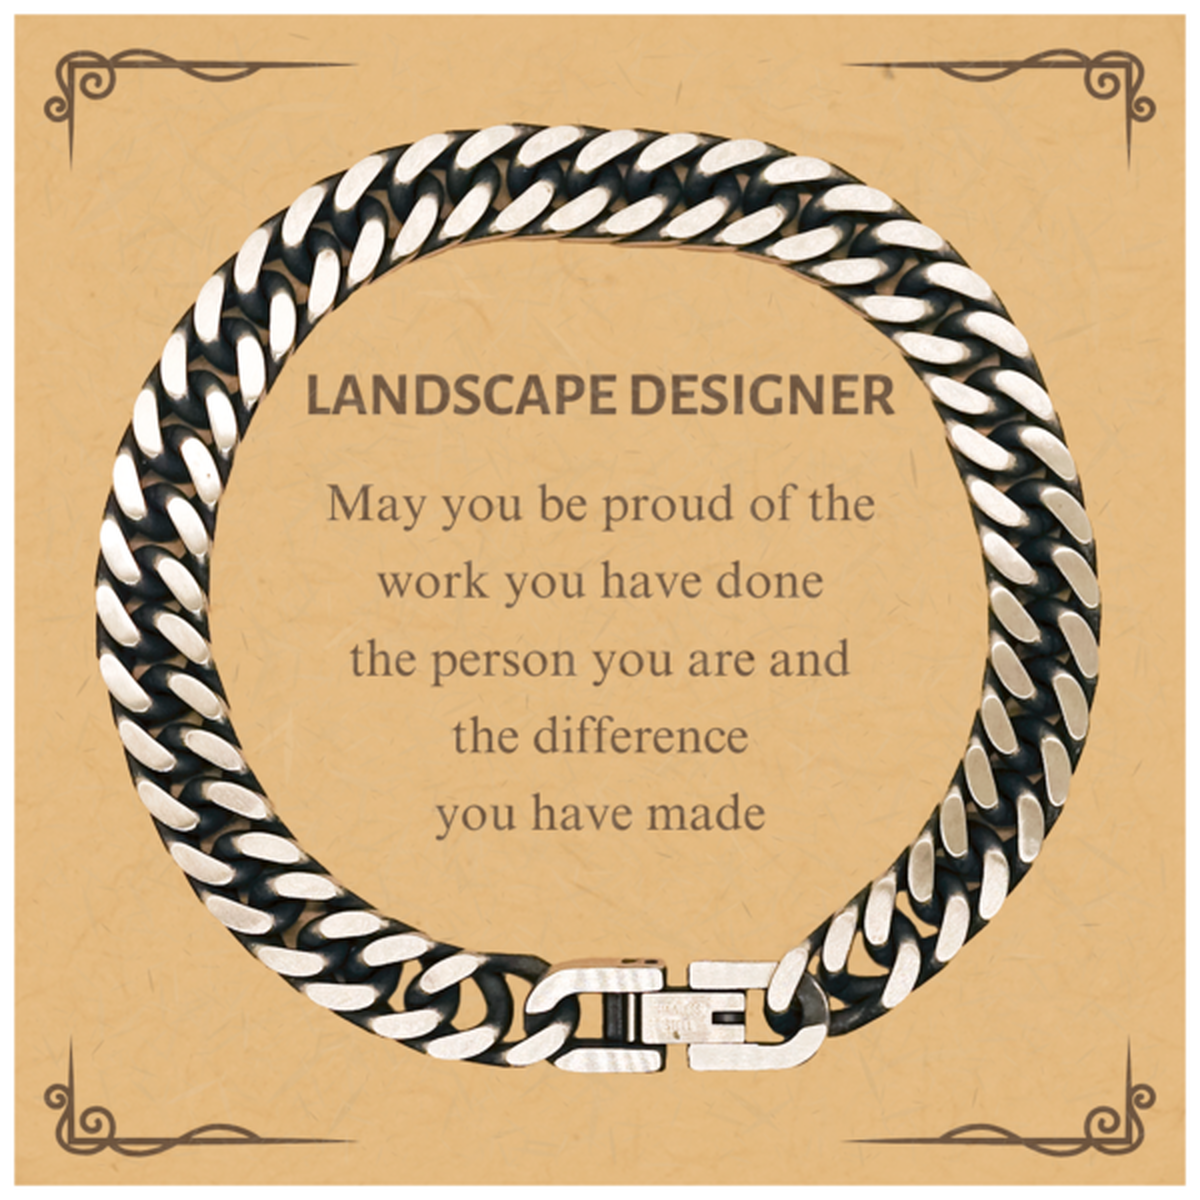 Landscape Designer May you be proud of the work you have done, Retirement Landscape Designer Cuban Link Chain Bracelet for Colleague Appreciation Gifts Amazing for Landscape Designer